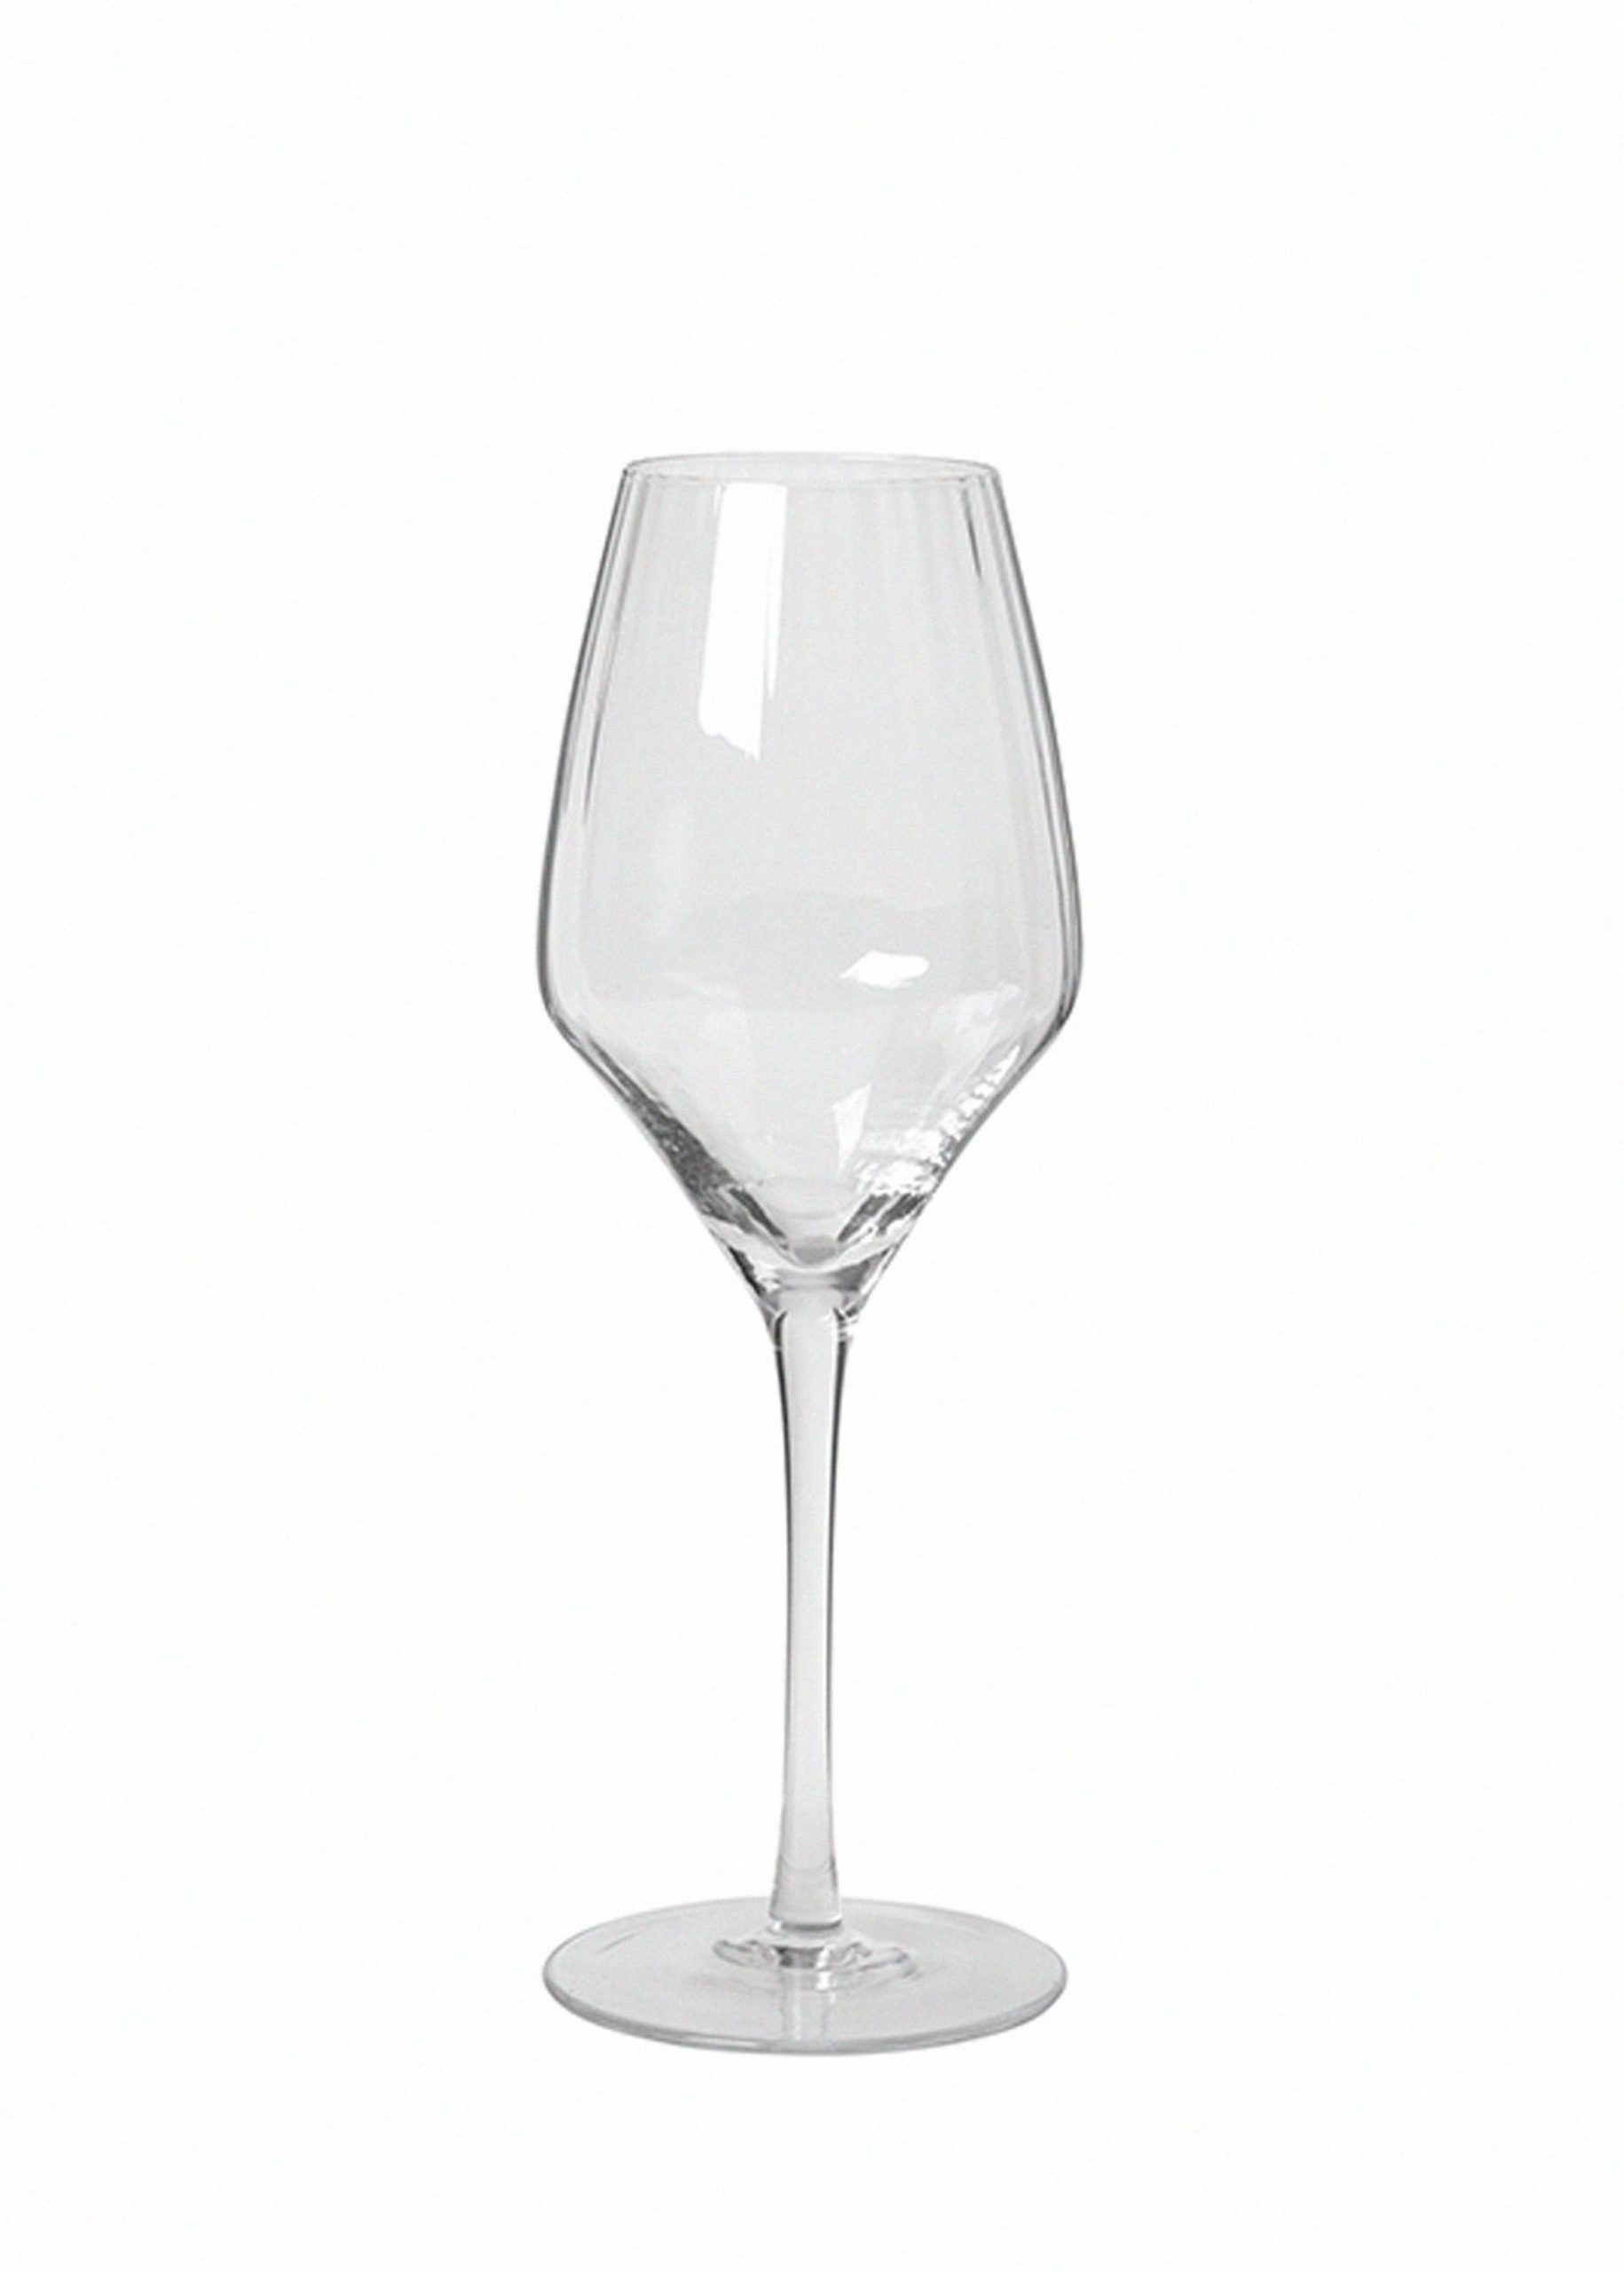 Sandvig Witte Wijnglas